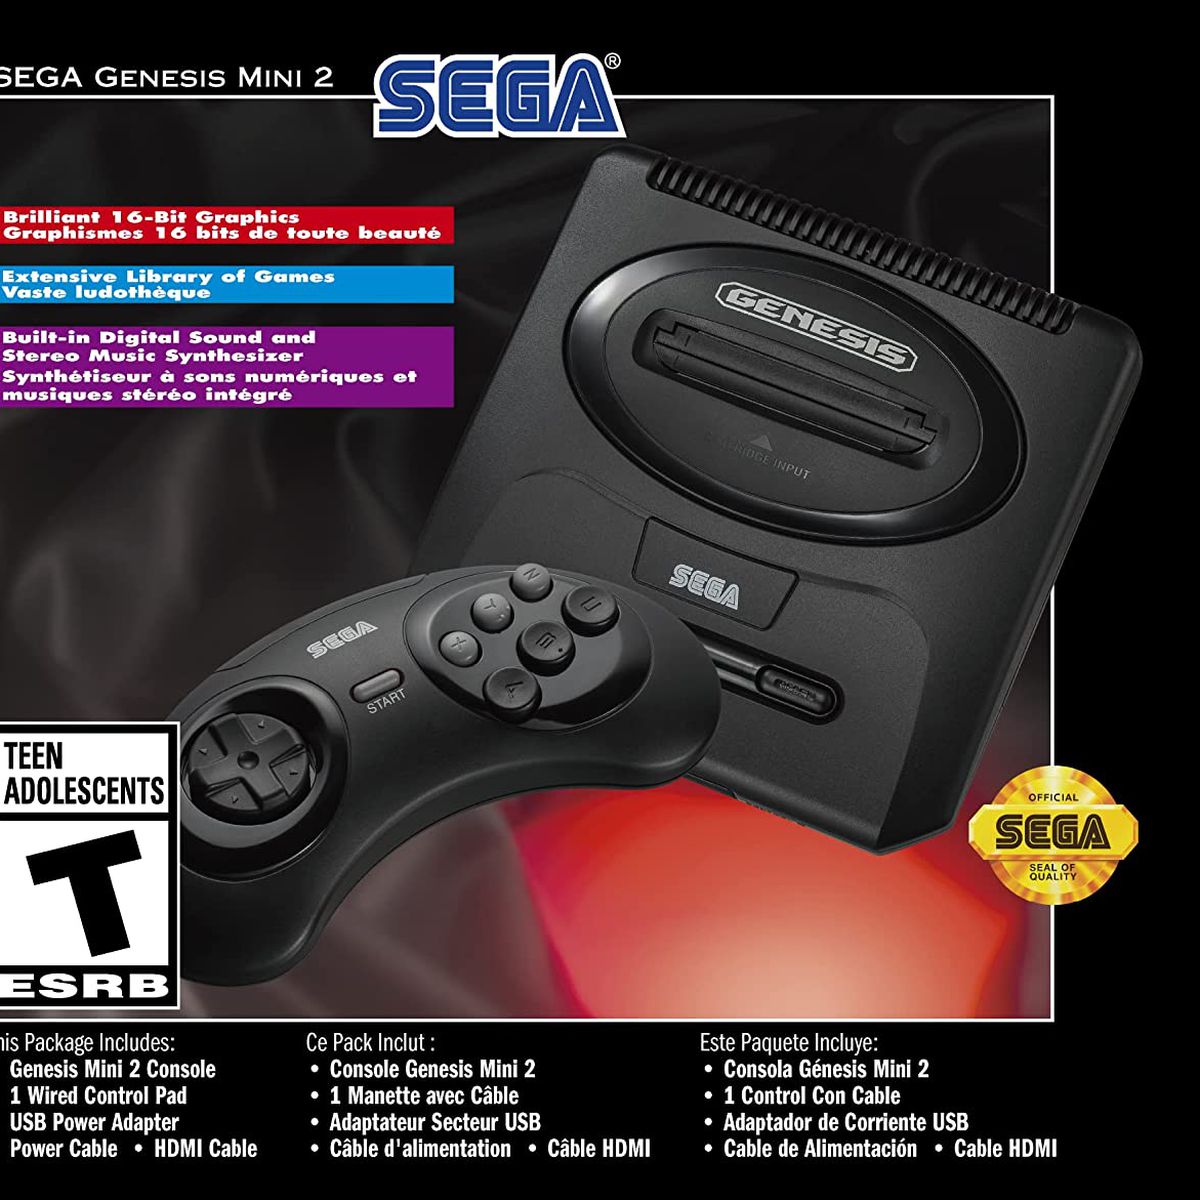 tuotepakkaus Sega Genesis Mini 2:lle